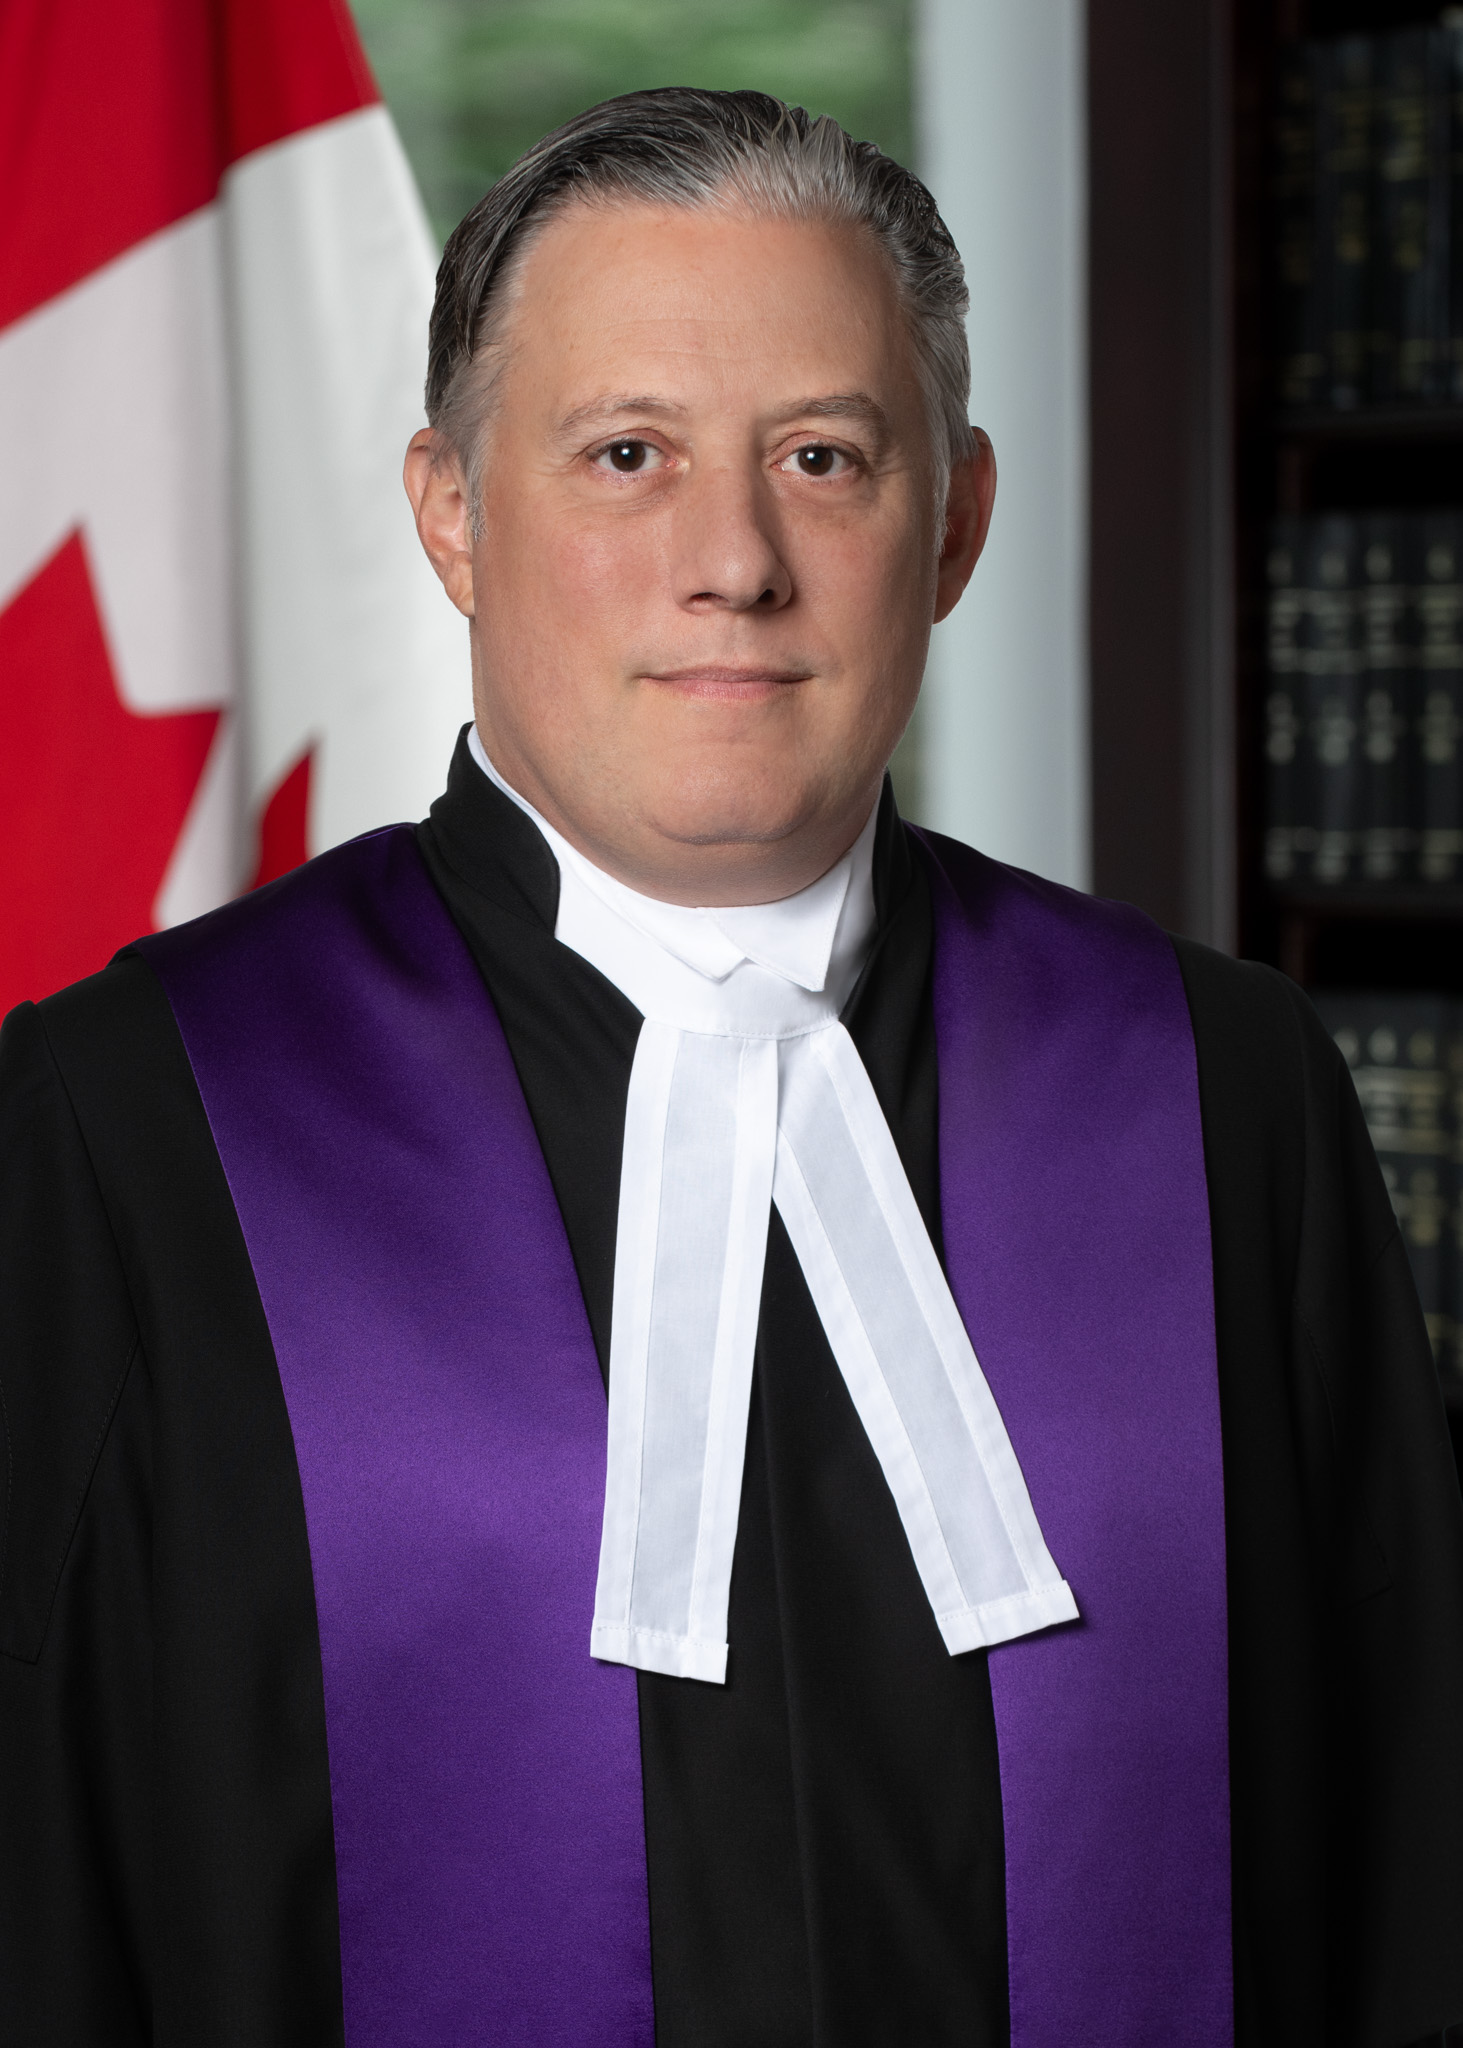 image: The Honourable Sylvain Ouimet